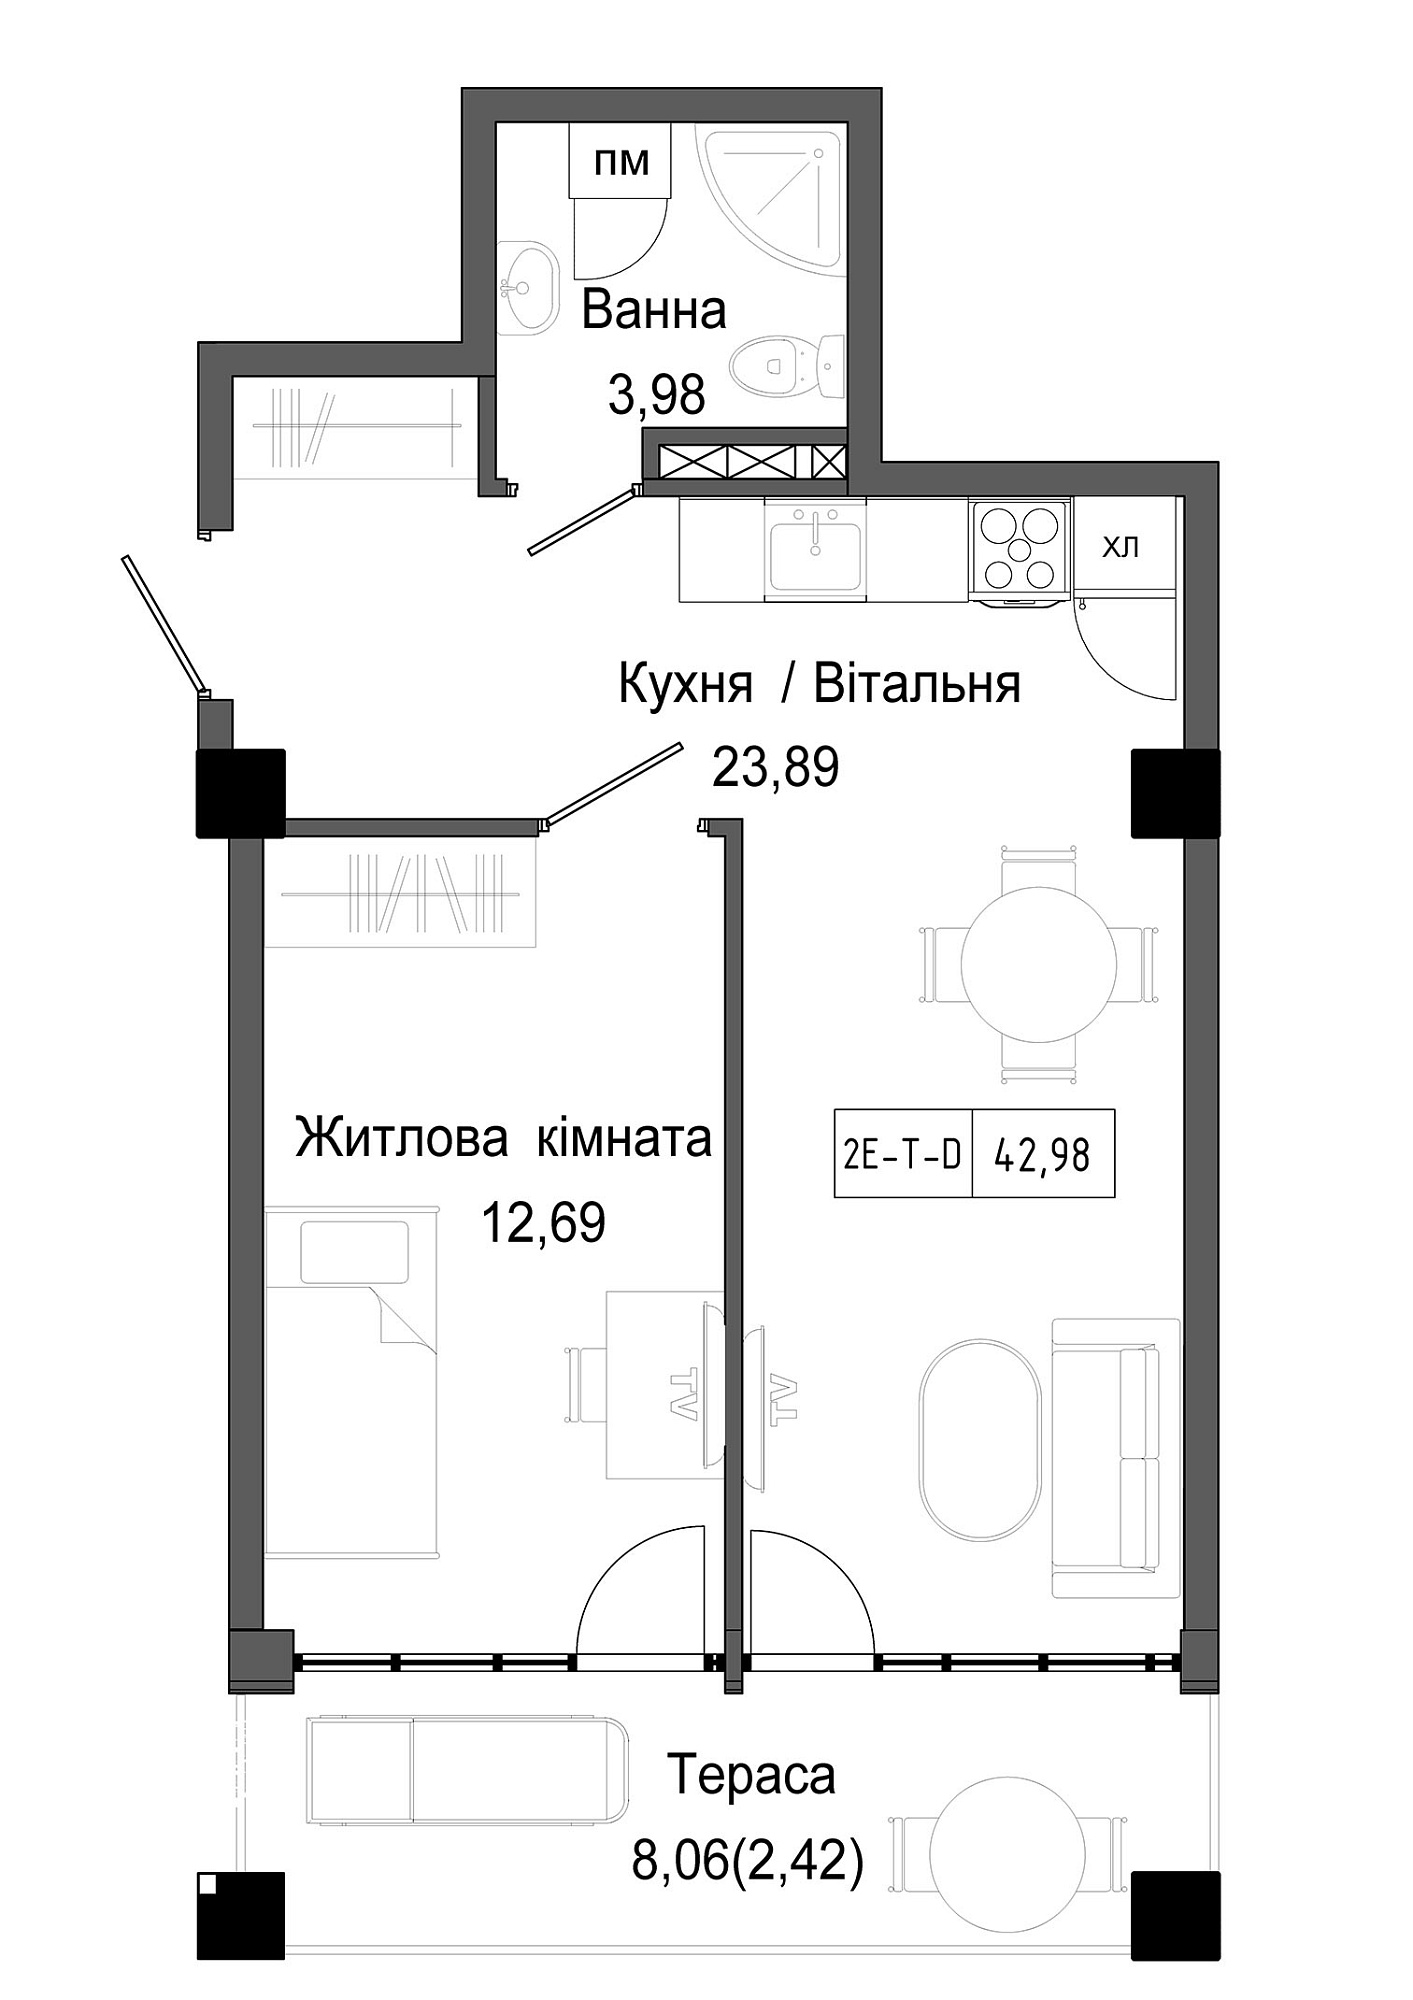 Планування 1-к квартира площею 42.98м2, UM-006-05/0006.